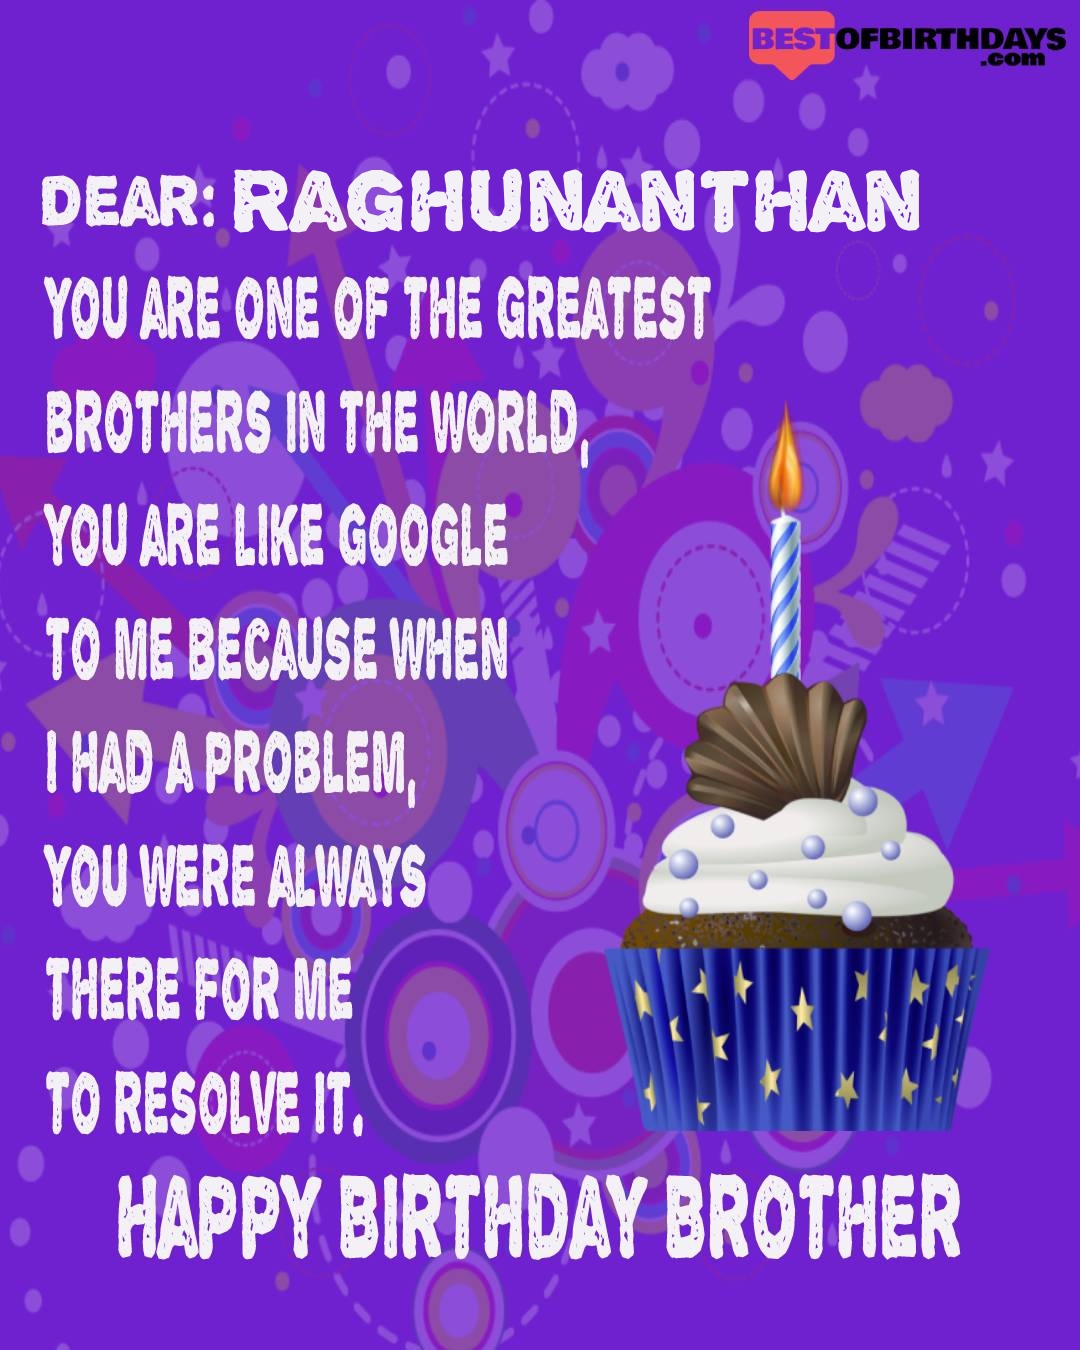 Happy birthday raghunanthan bhai brother bro